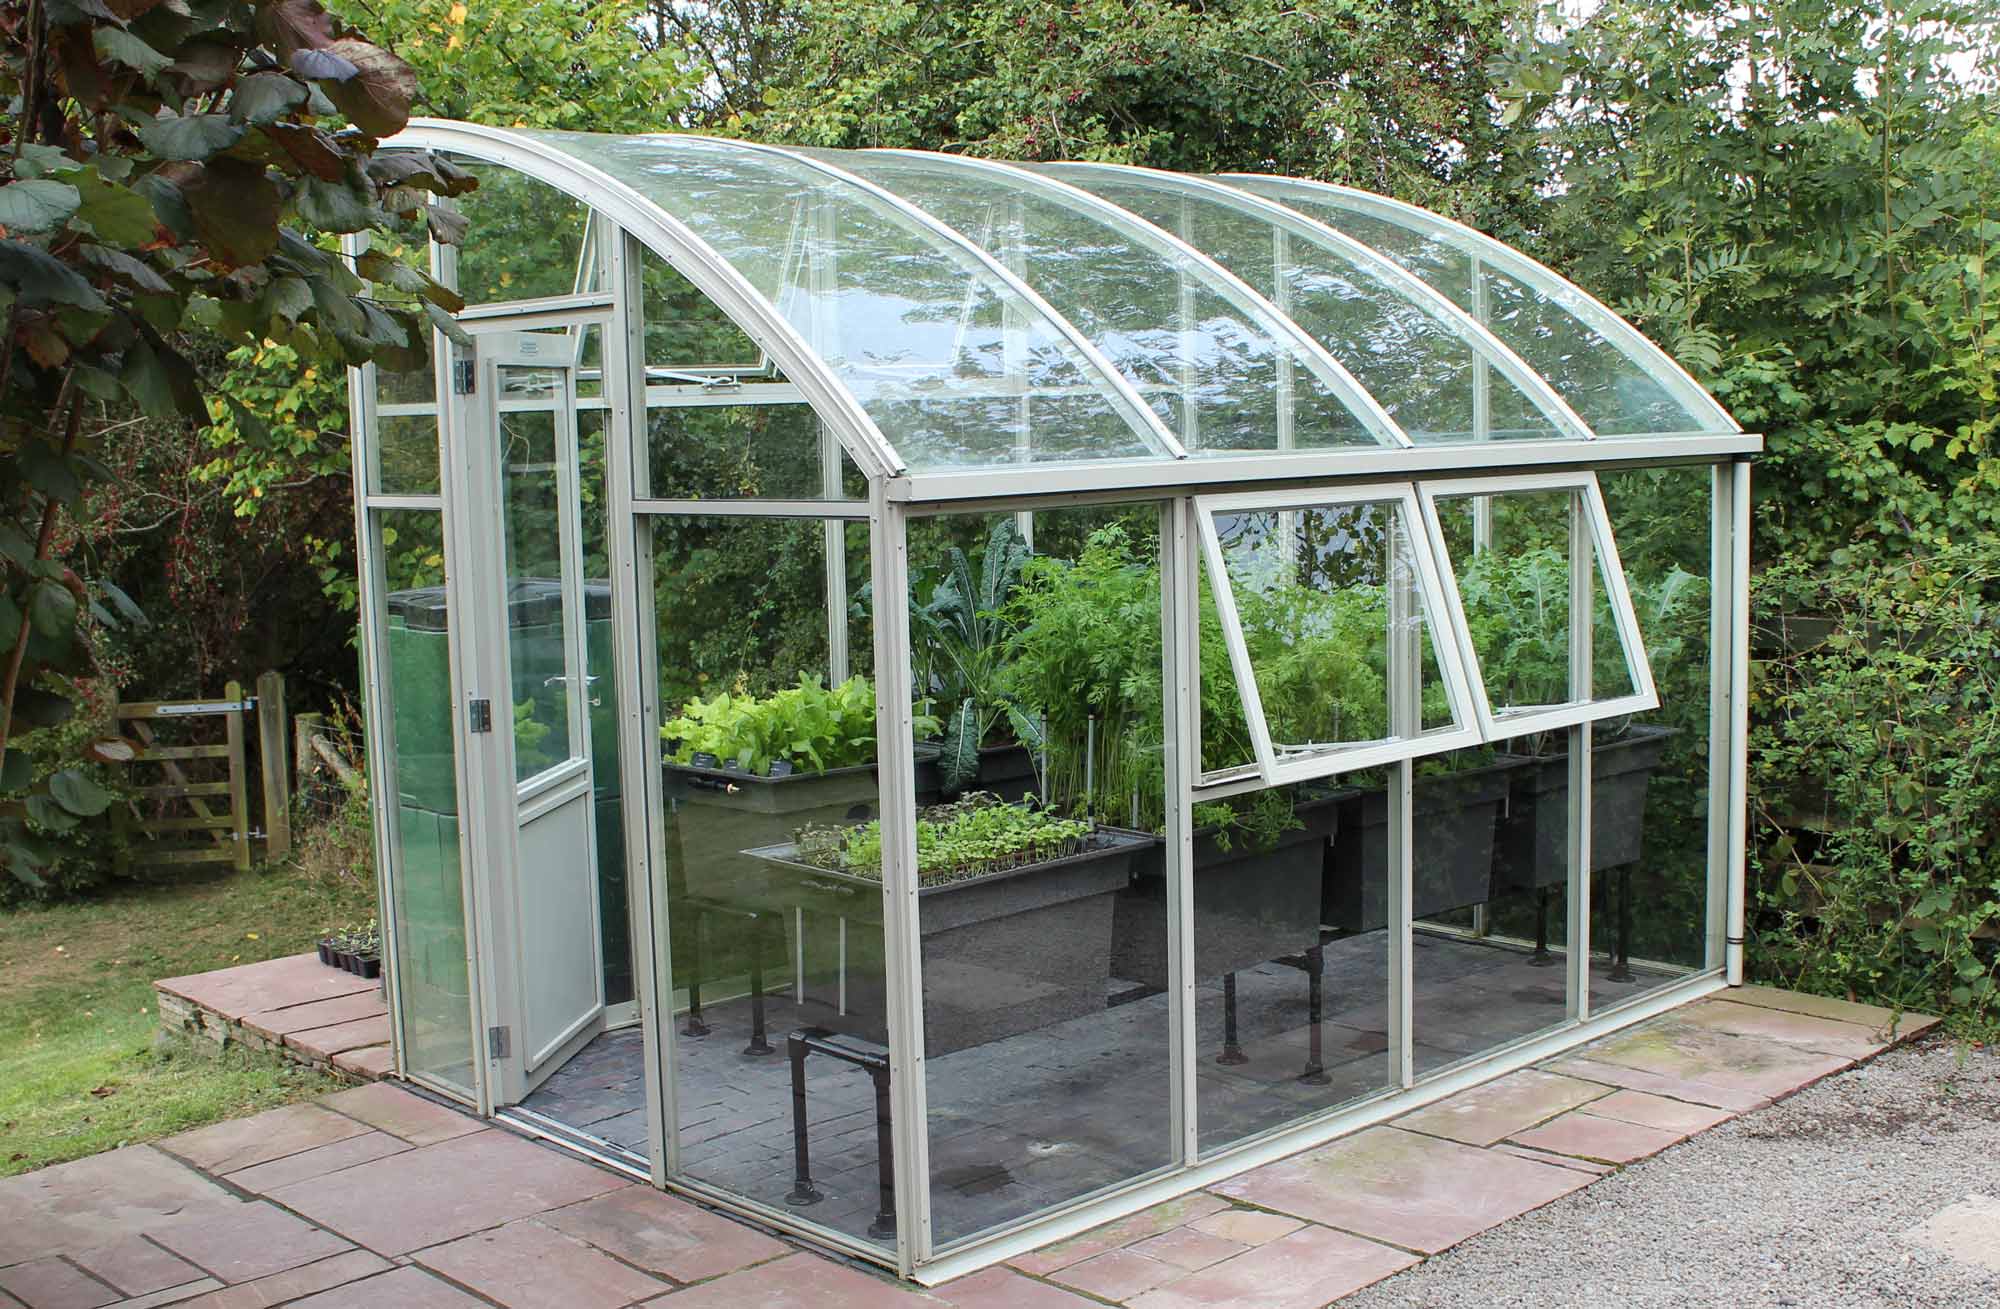 Greenhouse 1 